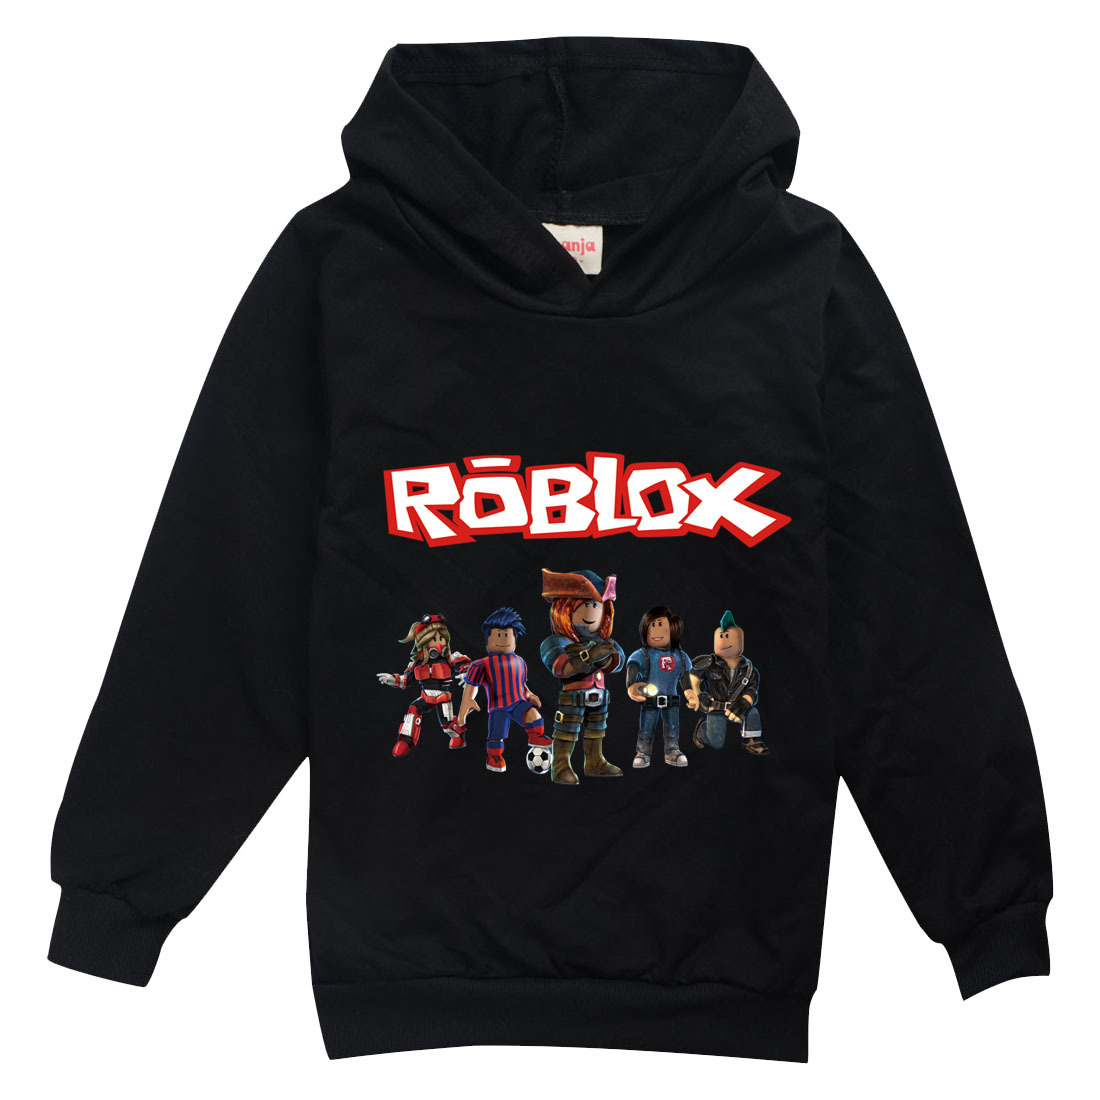 Rob-l-ox Hoodies For Kids 3d Print Cartoon Hoodie Boys Girls Pullover Sweatshirts Teen Fashion Tops 